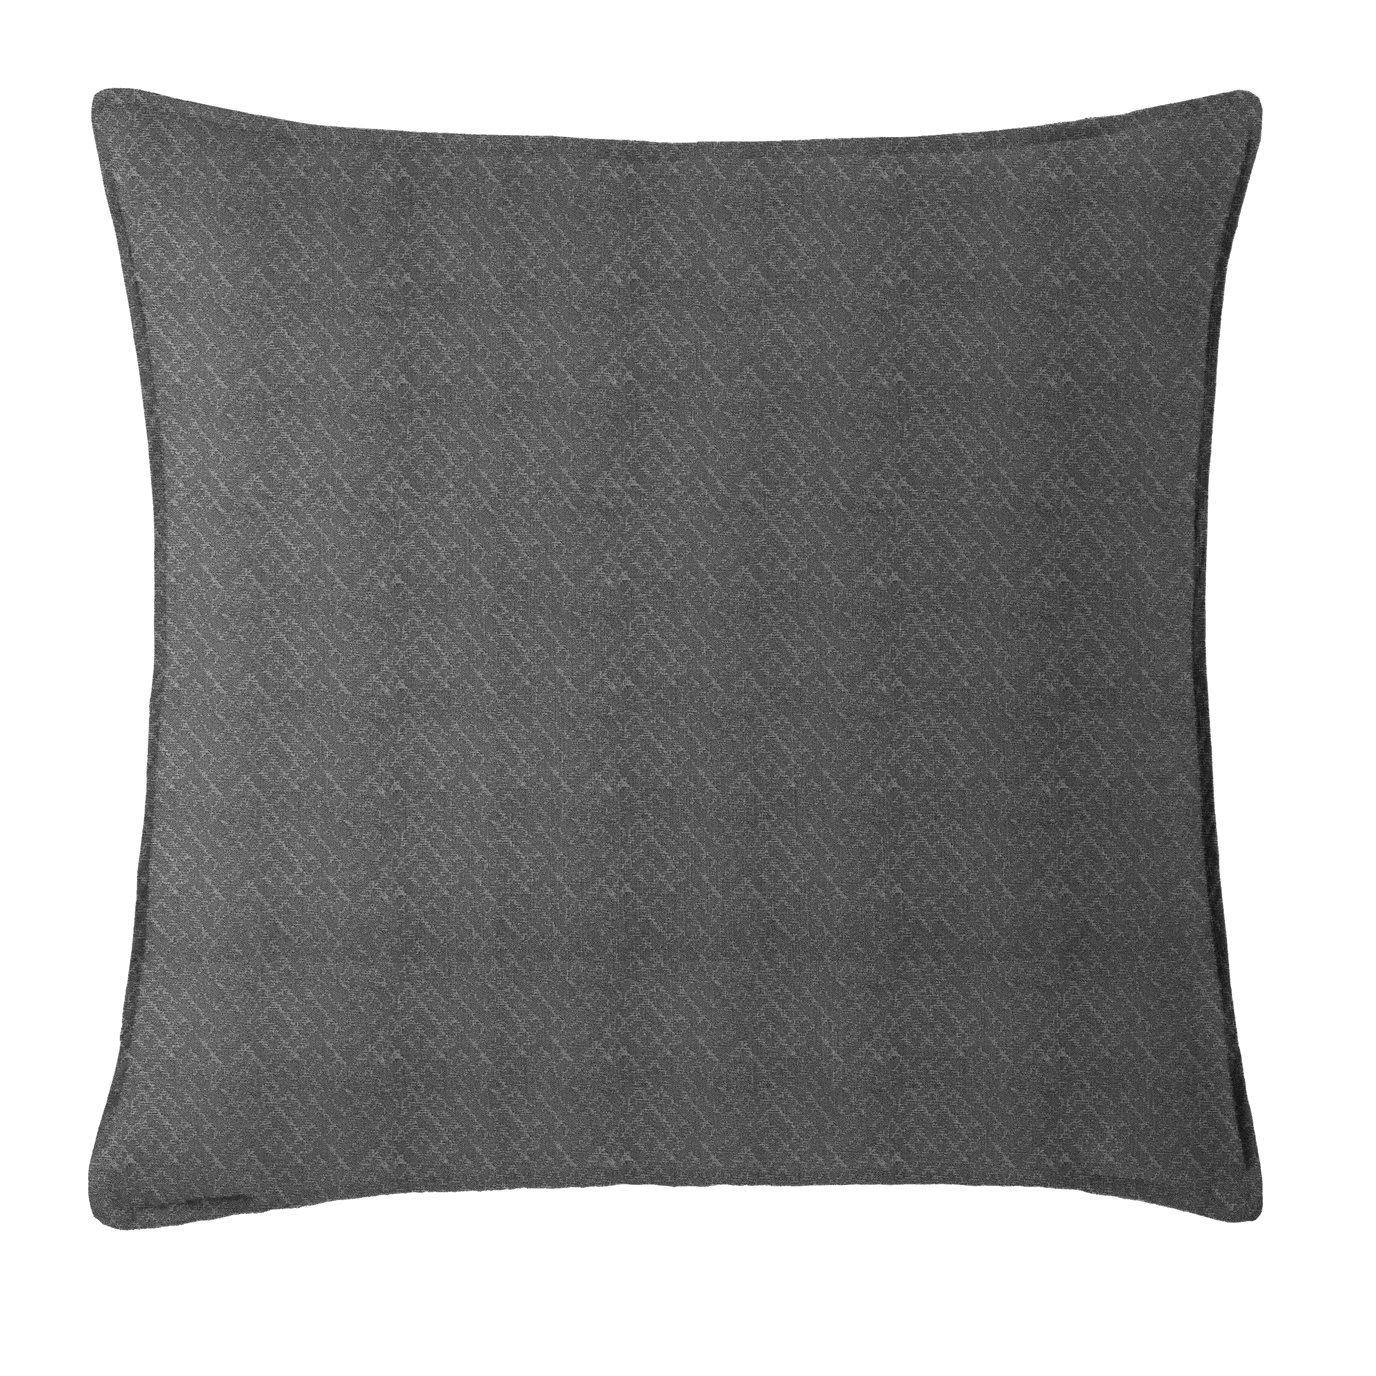 Gosfield Gray Square Pillow 20"x20"